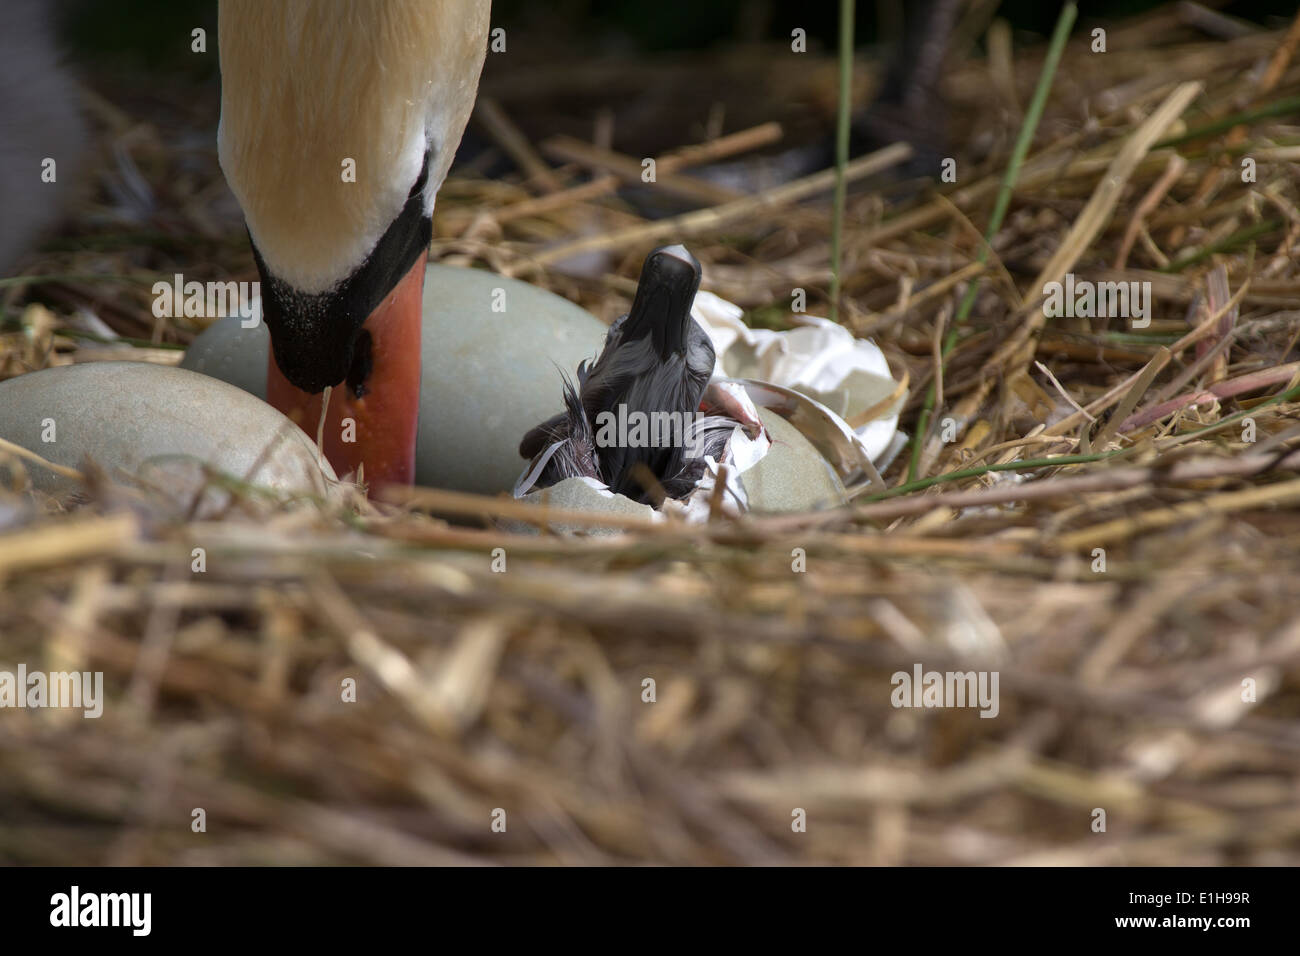 Cisne, Cygnus olor cygnet incubar desde su huevo Foto de stock